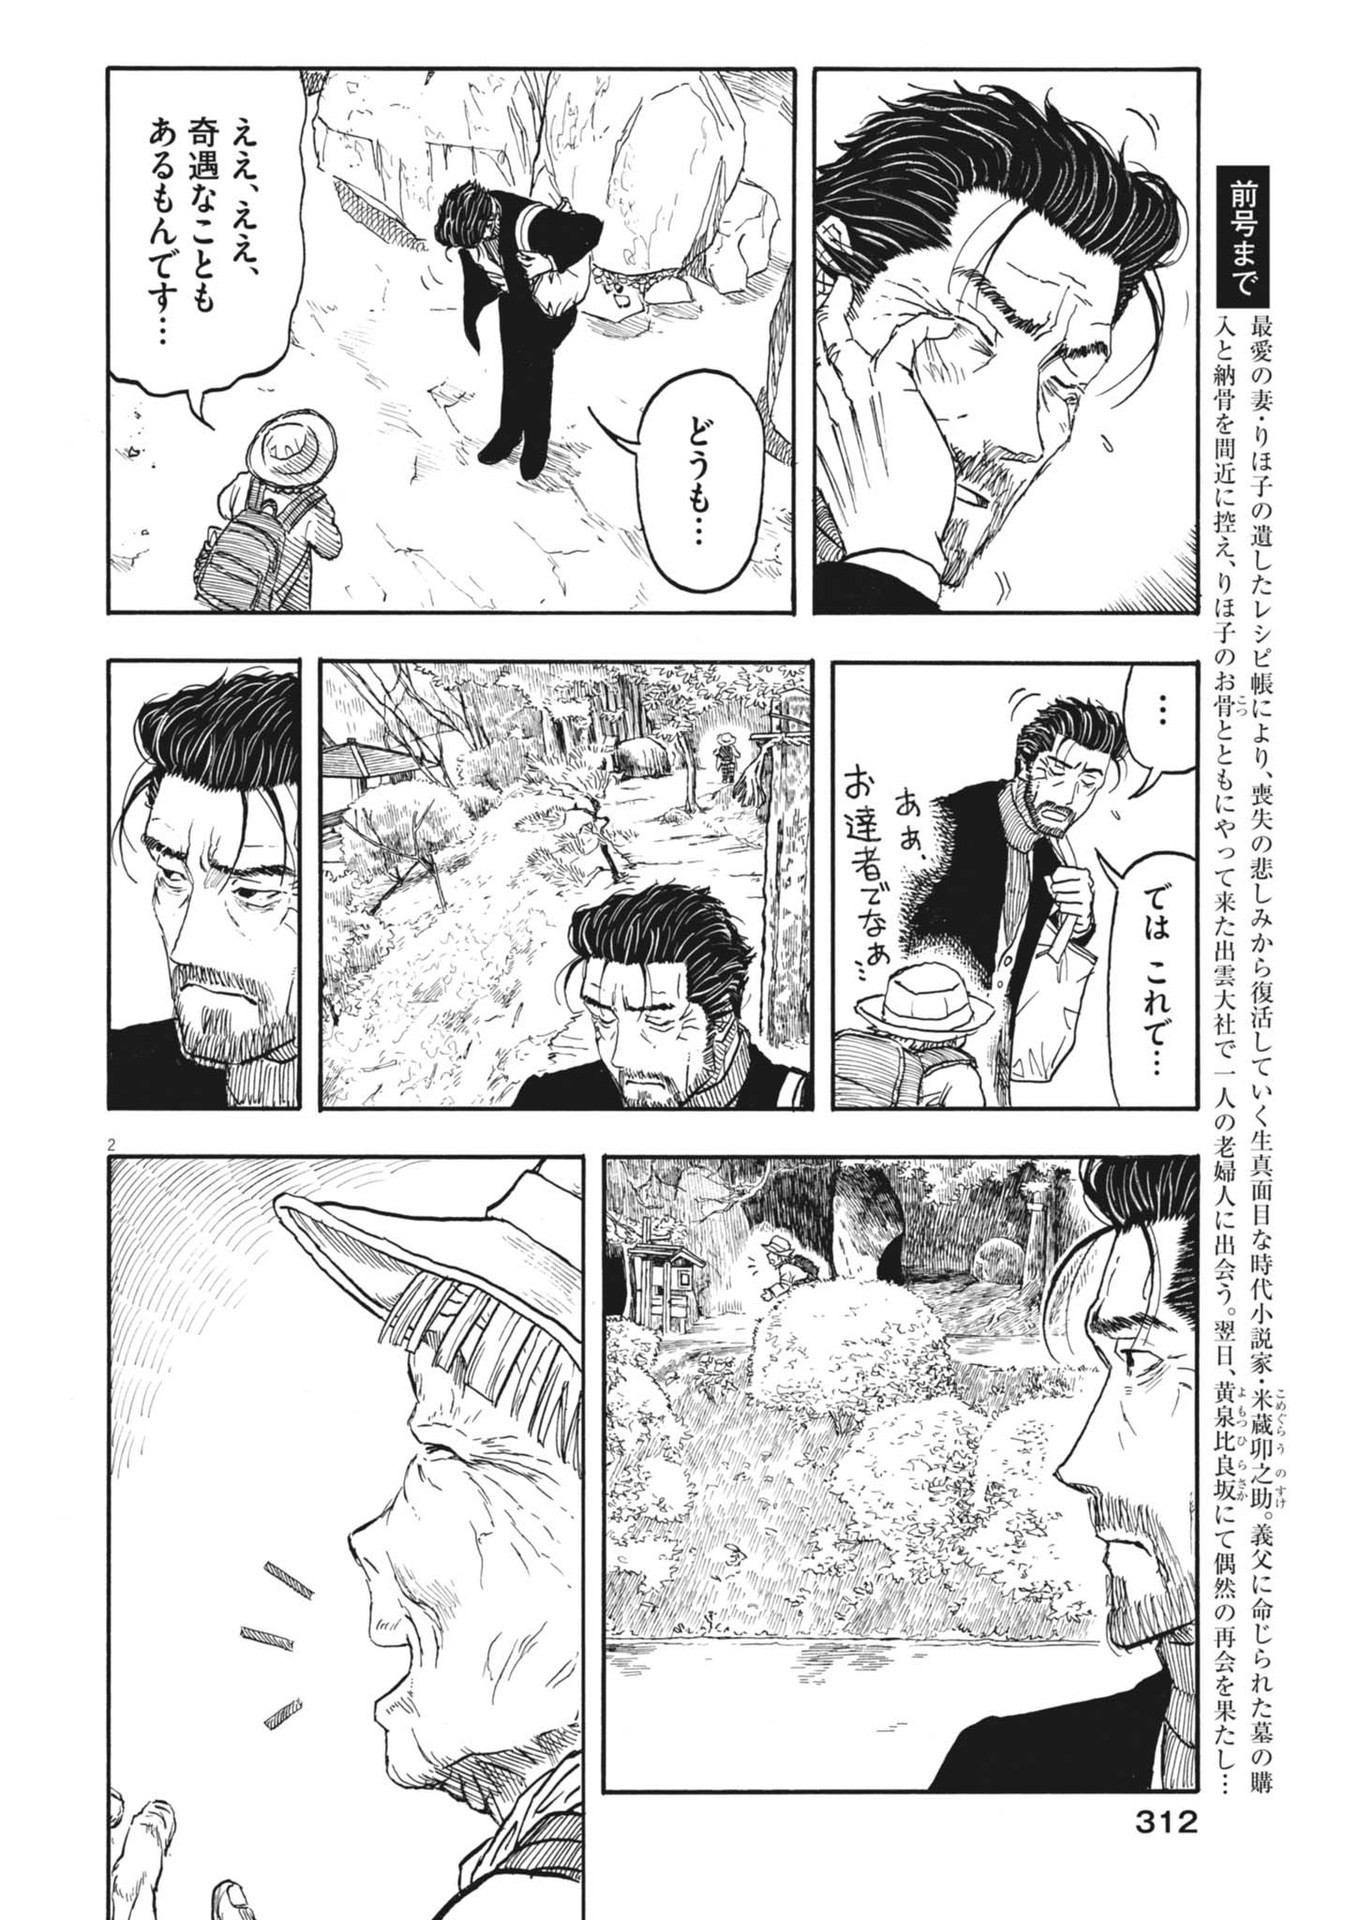 Komegura Fuufu no Recipe-chou - Chapter 37 - Page 2